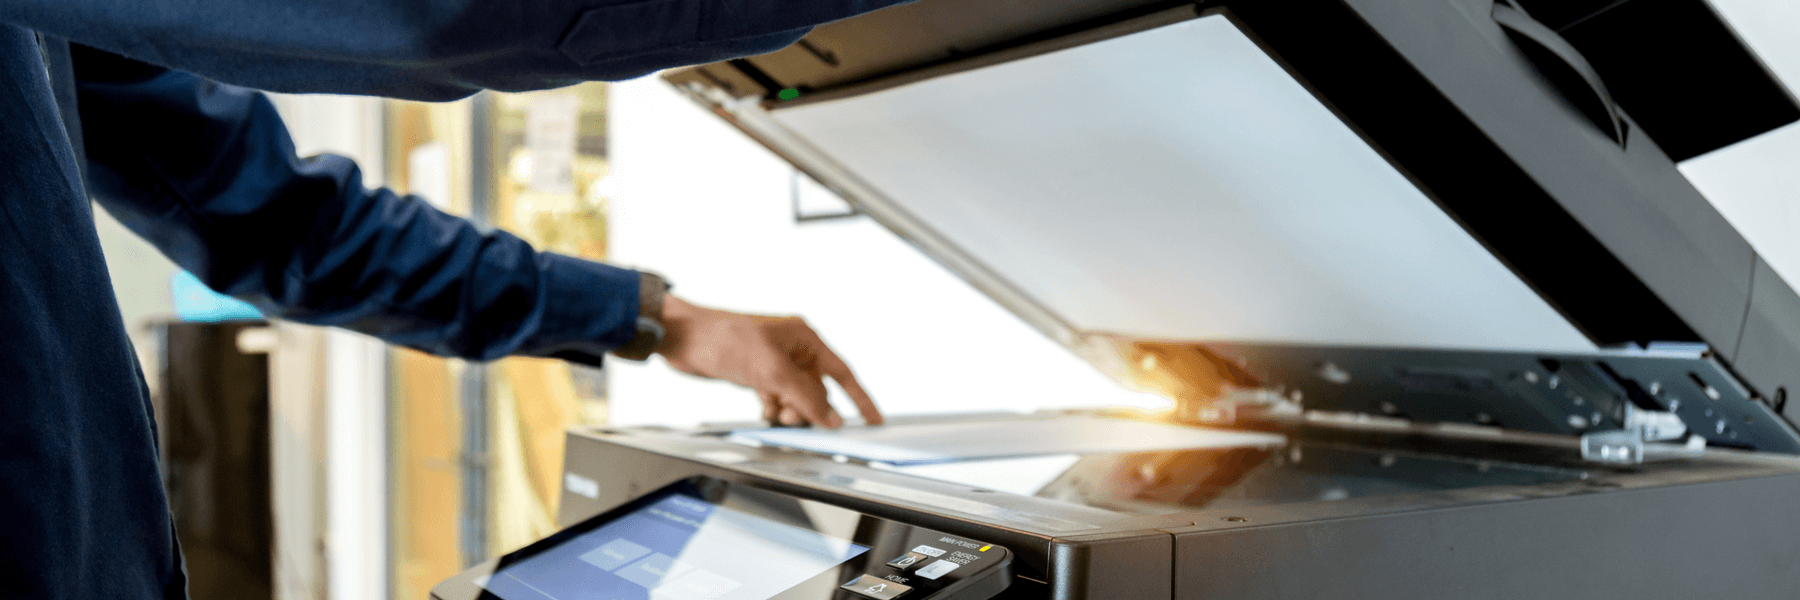 Bussiness man Hand press button on panel of printer, printer scanner laser office copy machine